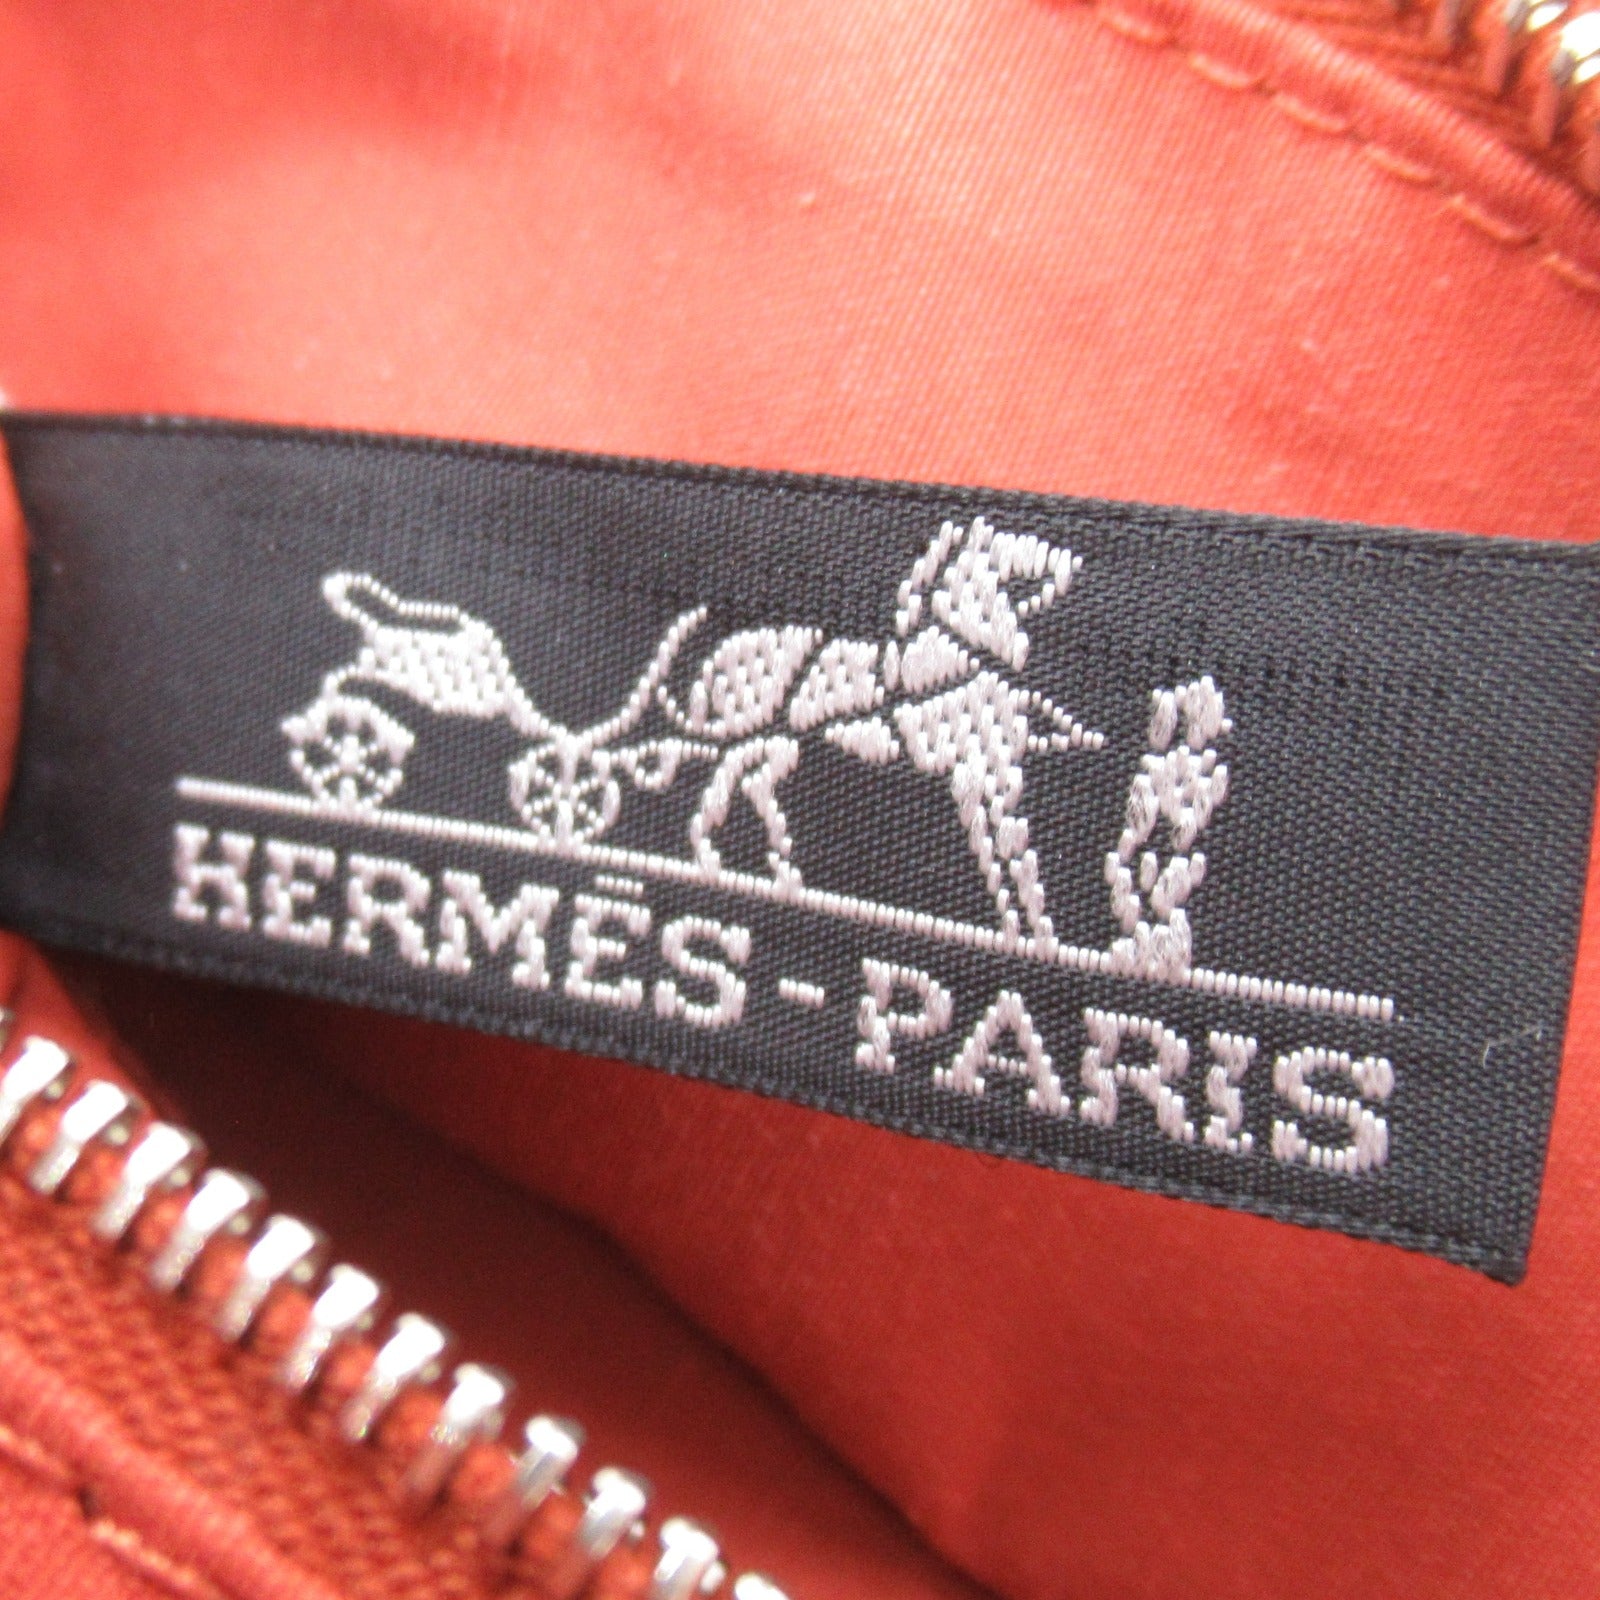 Hermes Hermes Acapulco PM Tote Bag  Bag Nylon  Orange Box